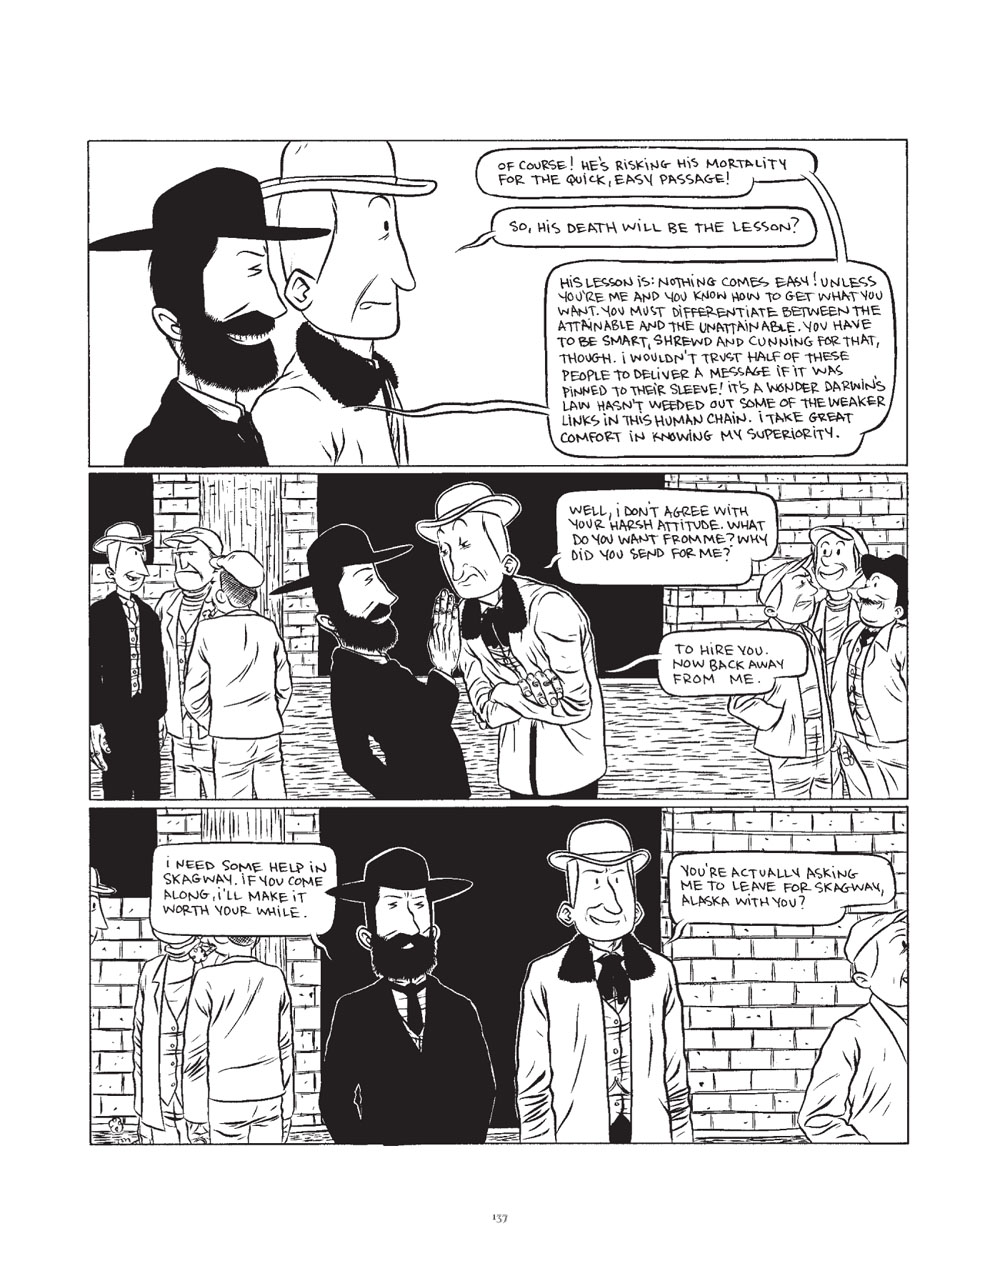 The Klondike Page 137